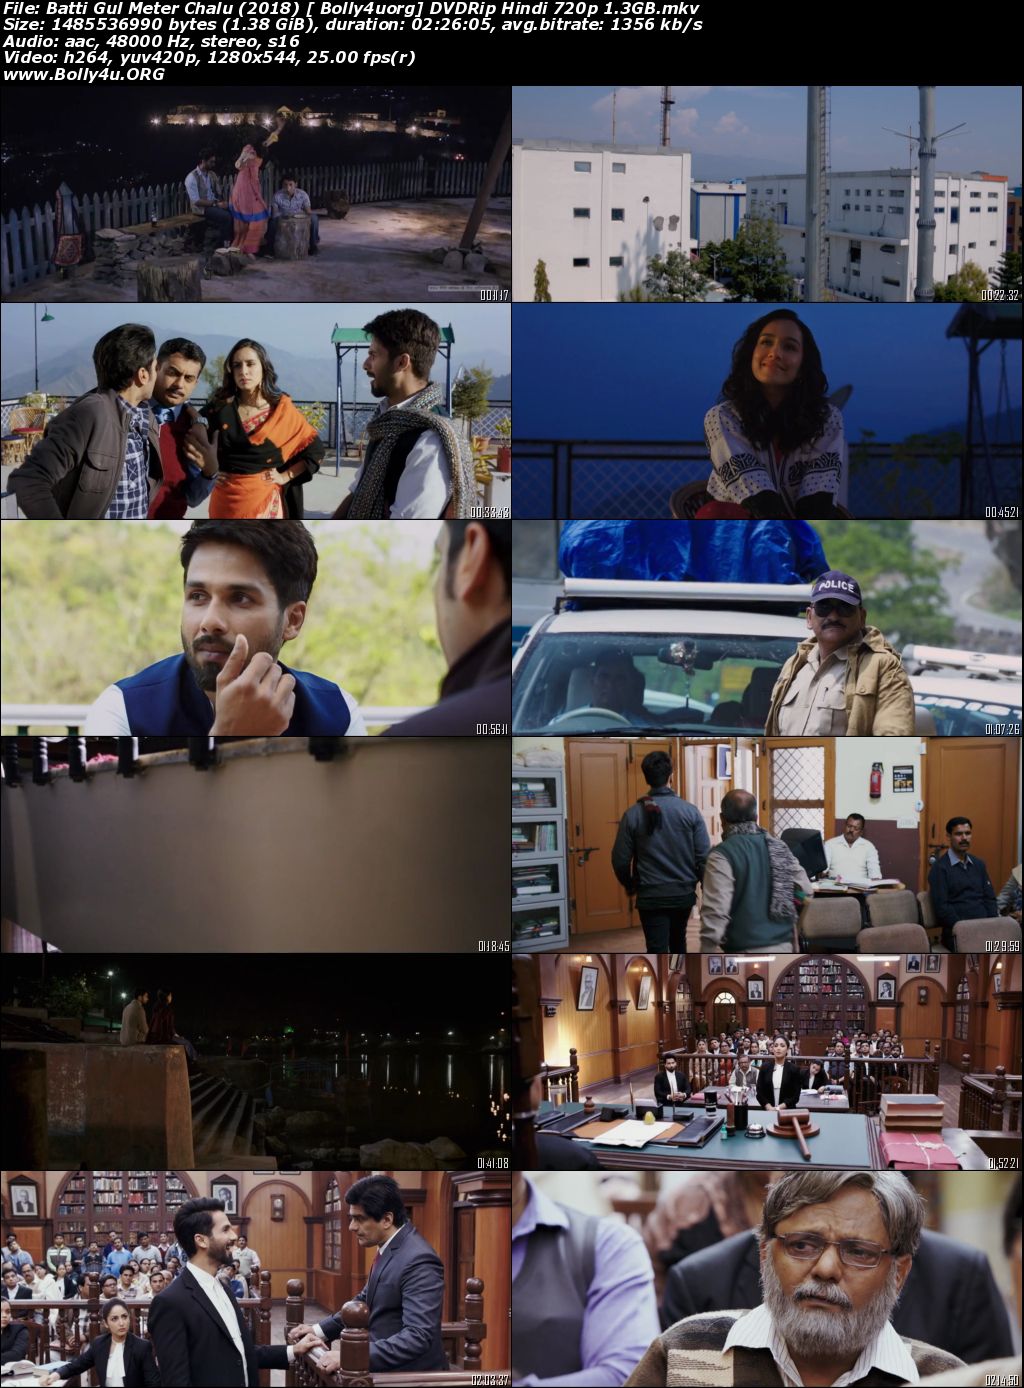 Batti Gul Meter Chalu 2018 DVDRip 1GB Hindi Full Movie Download 720p